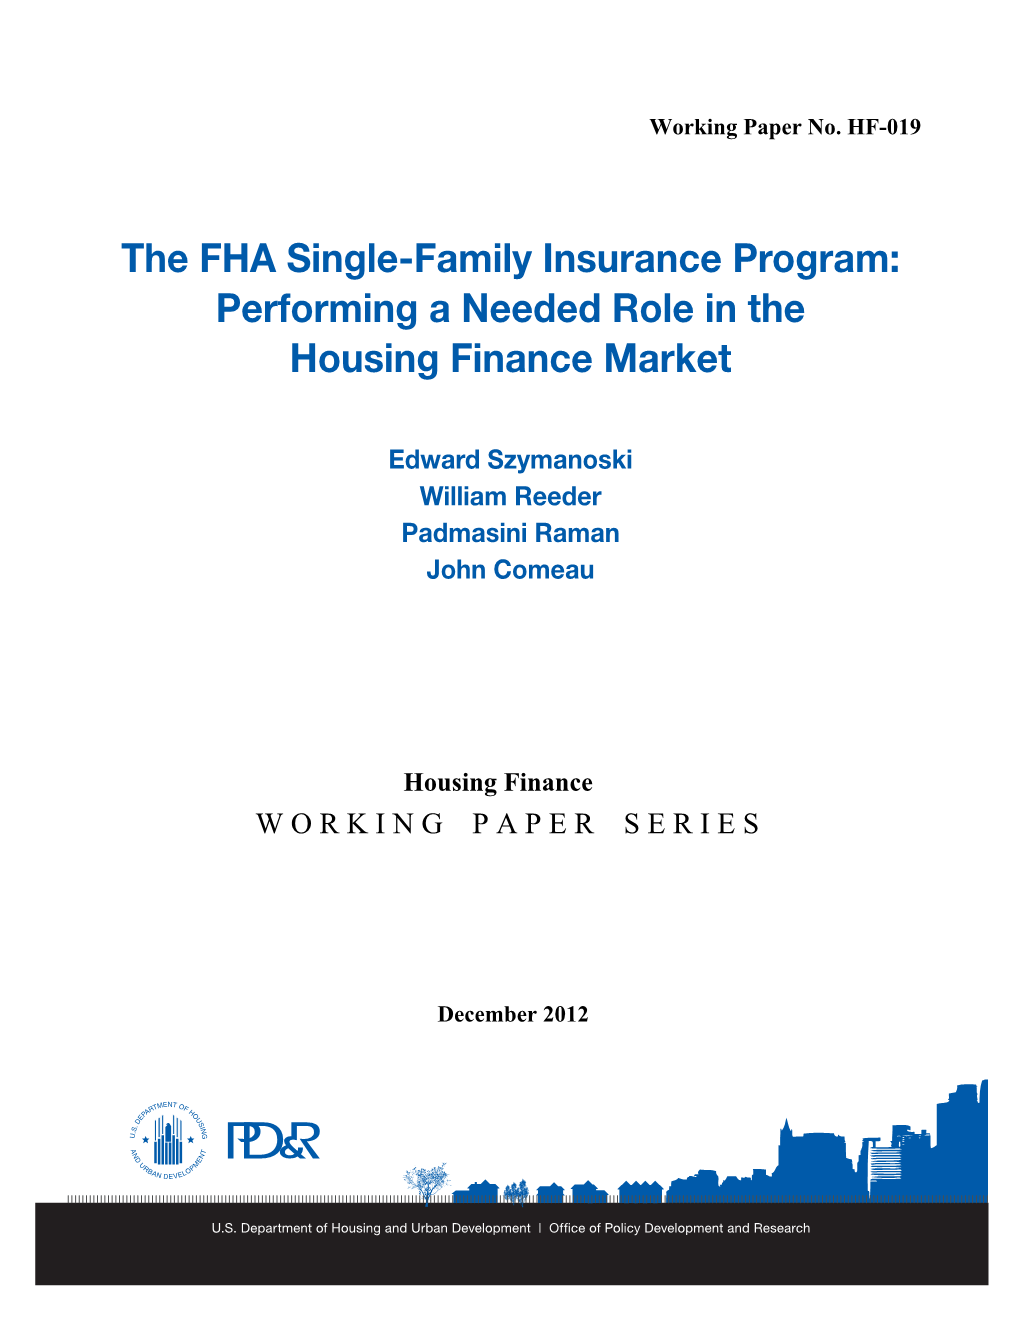 The FHA Single-Family Insurance Program Performing A